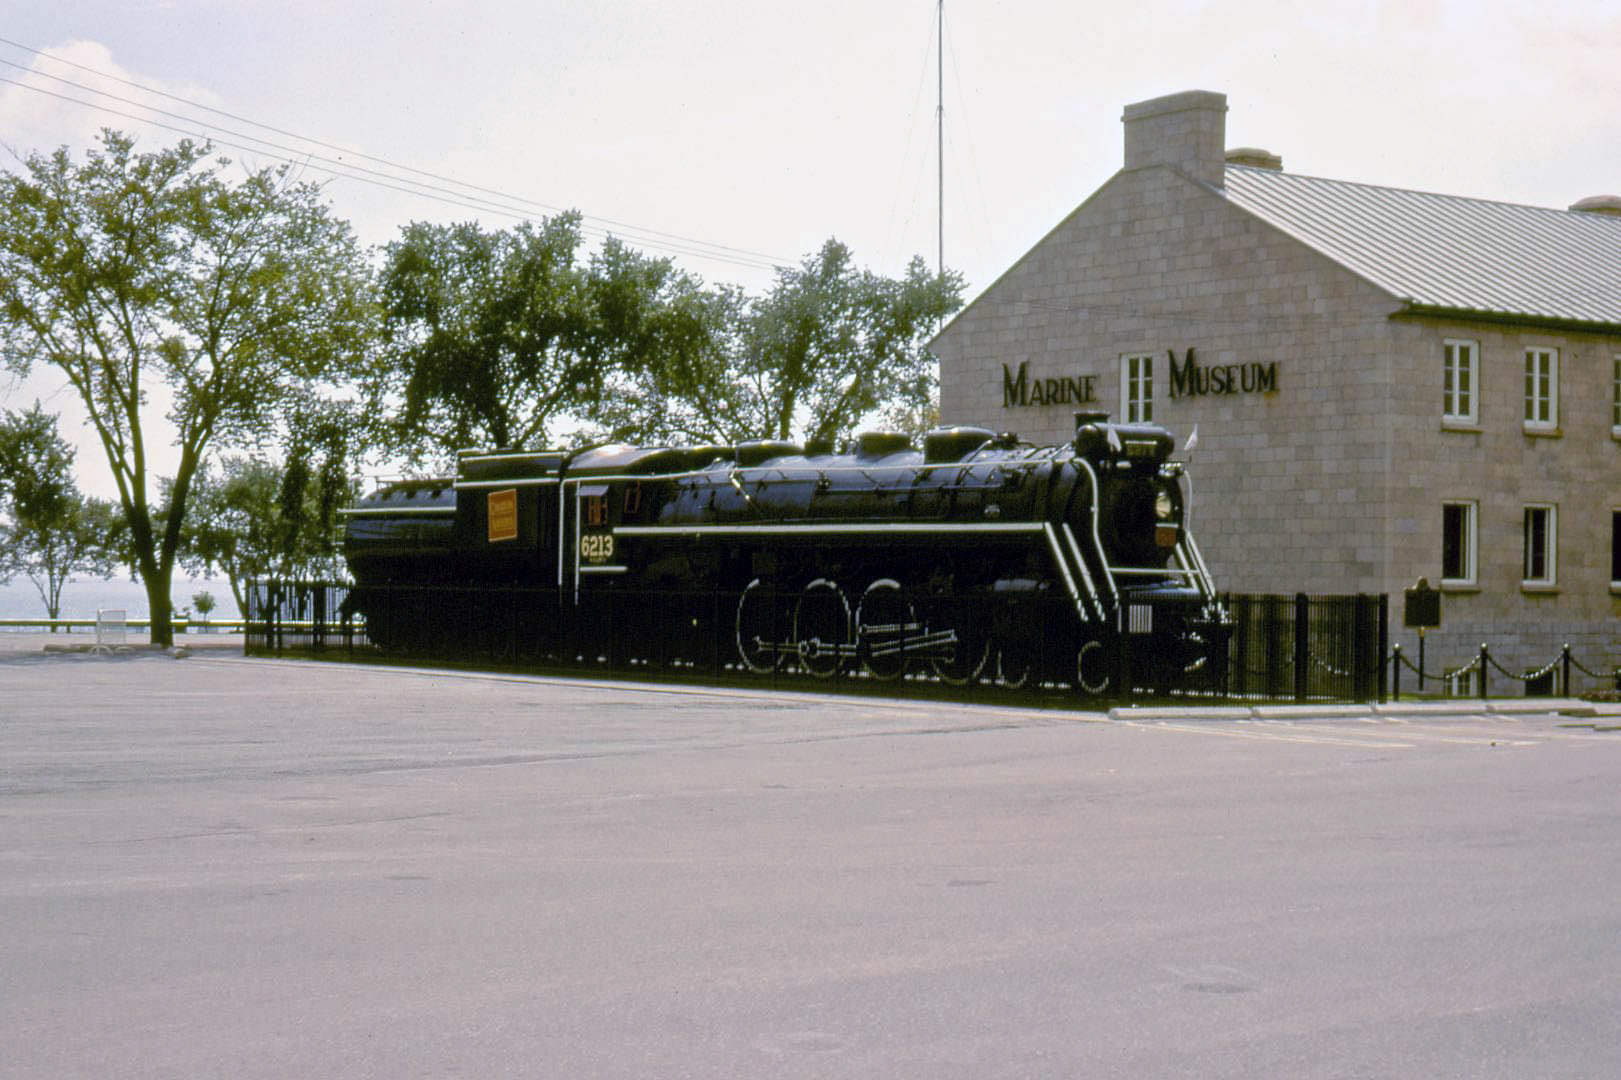 Canadian National Railways #6213 steam locomotive beside the Toronto Marine Museum, CNE grounds, 1968